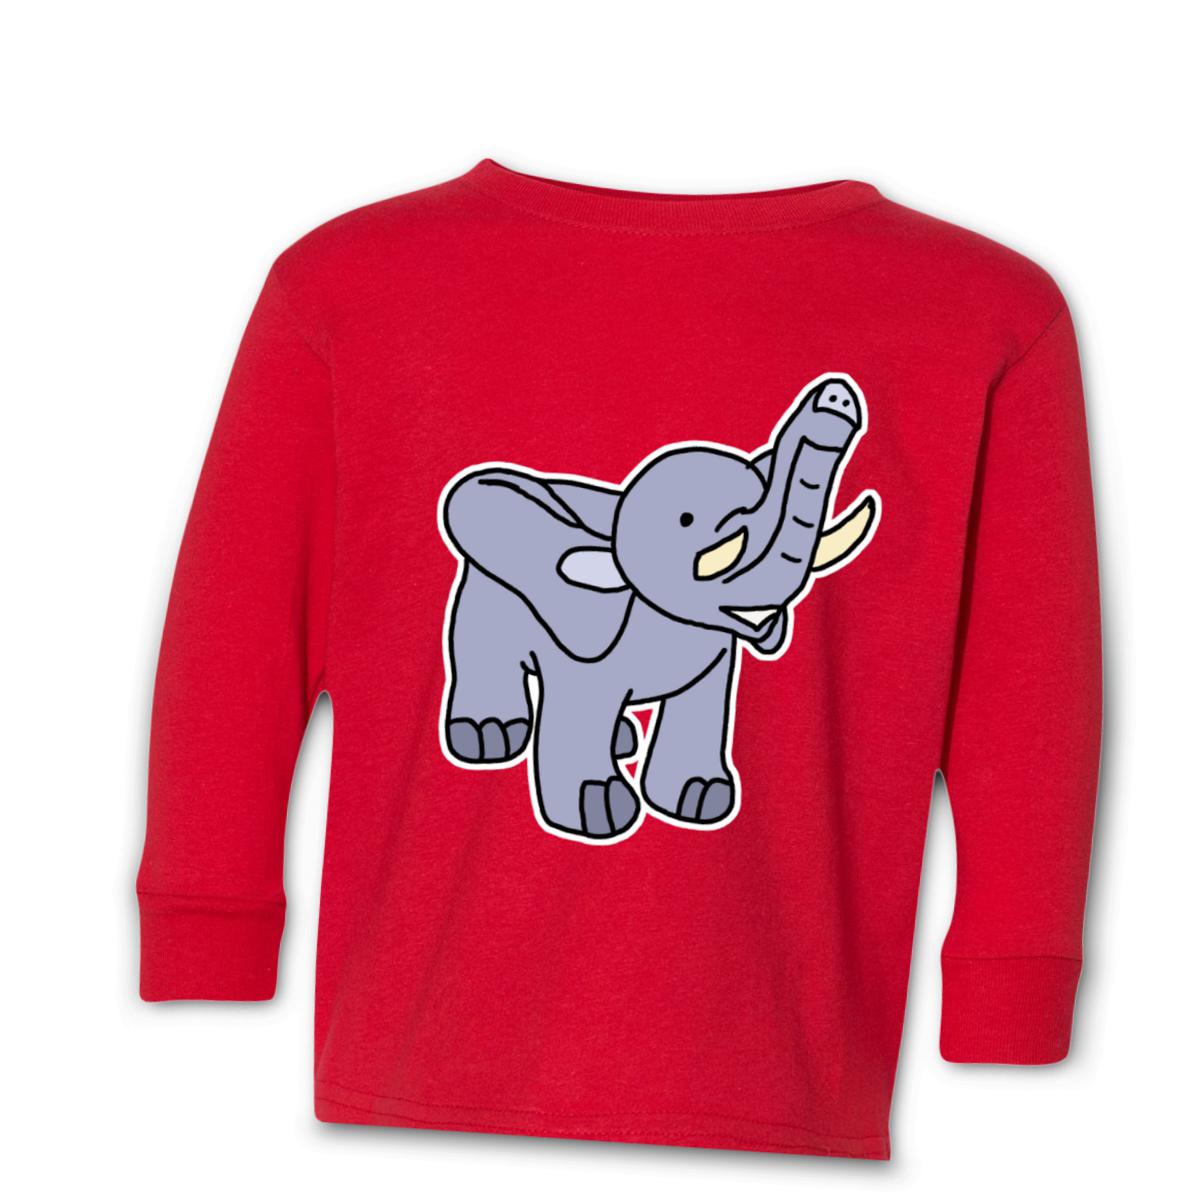 Toy Elephant Kid's Long Sleeve Tee Medium red